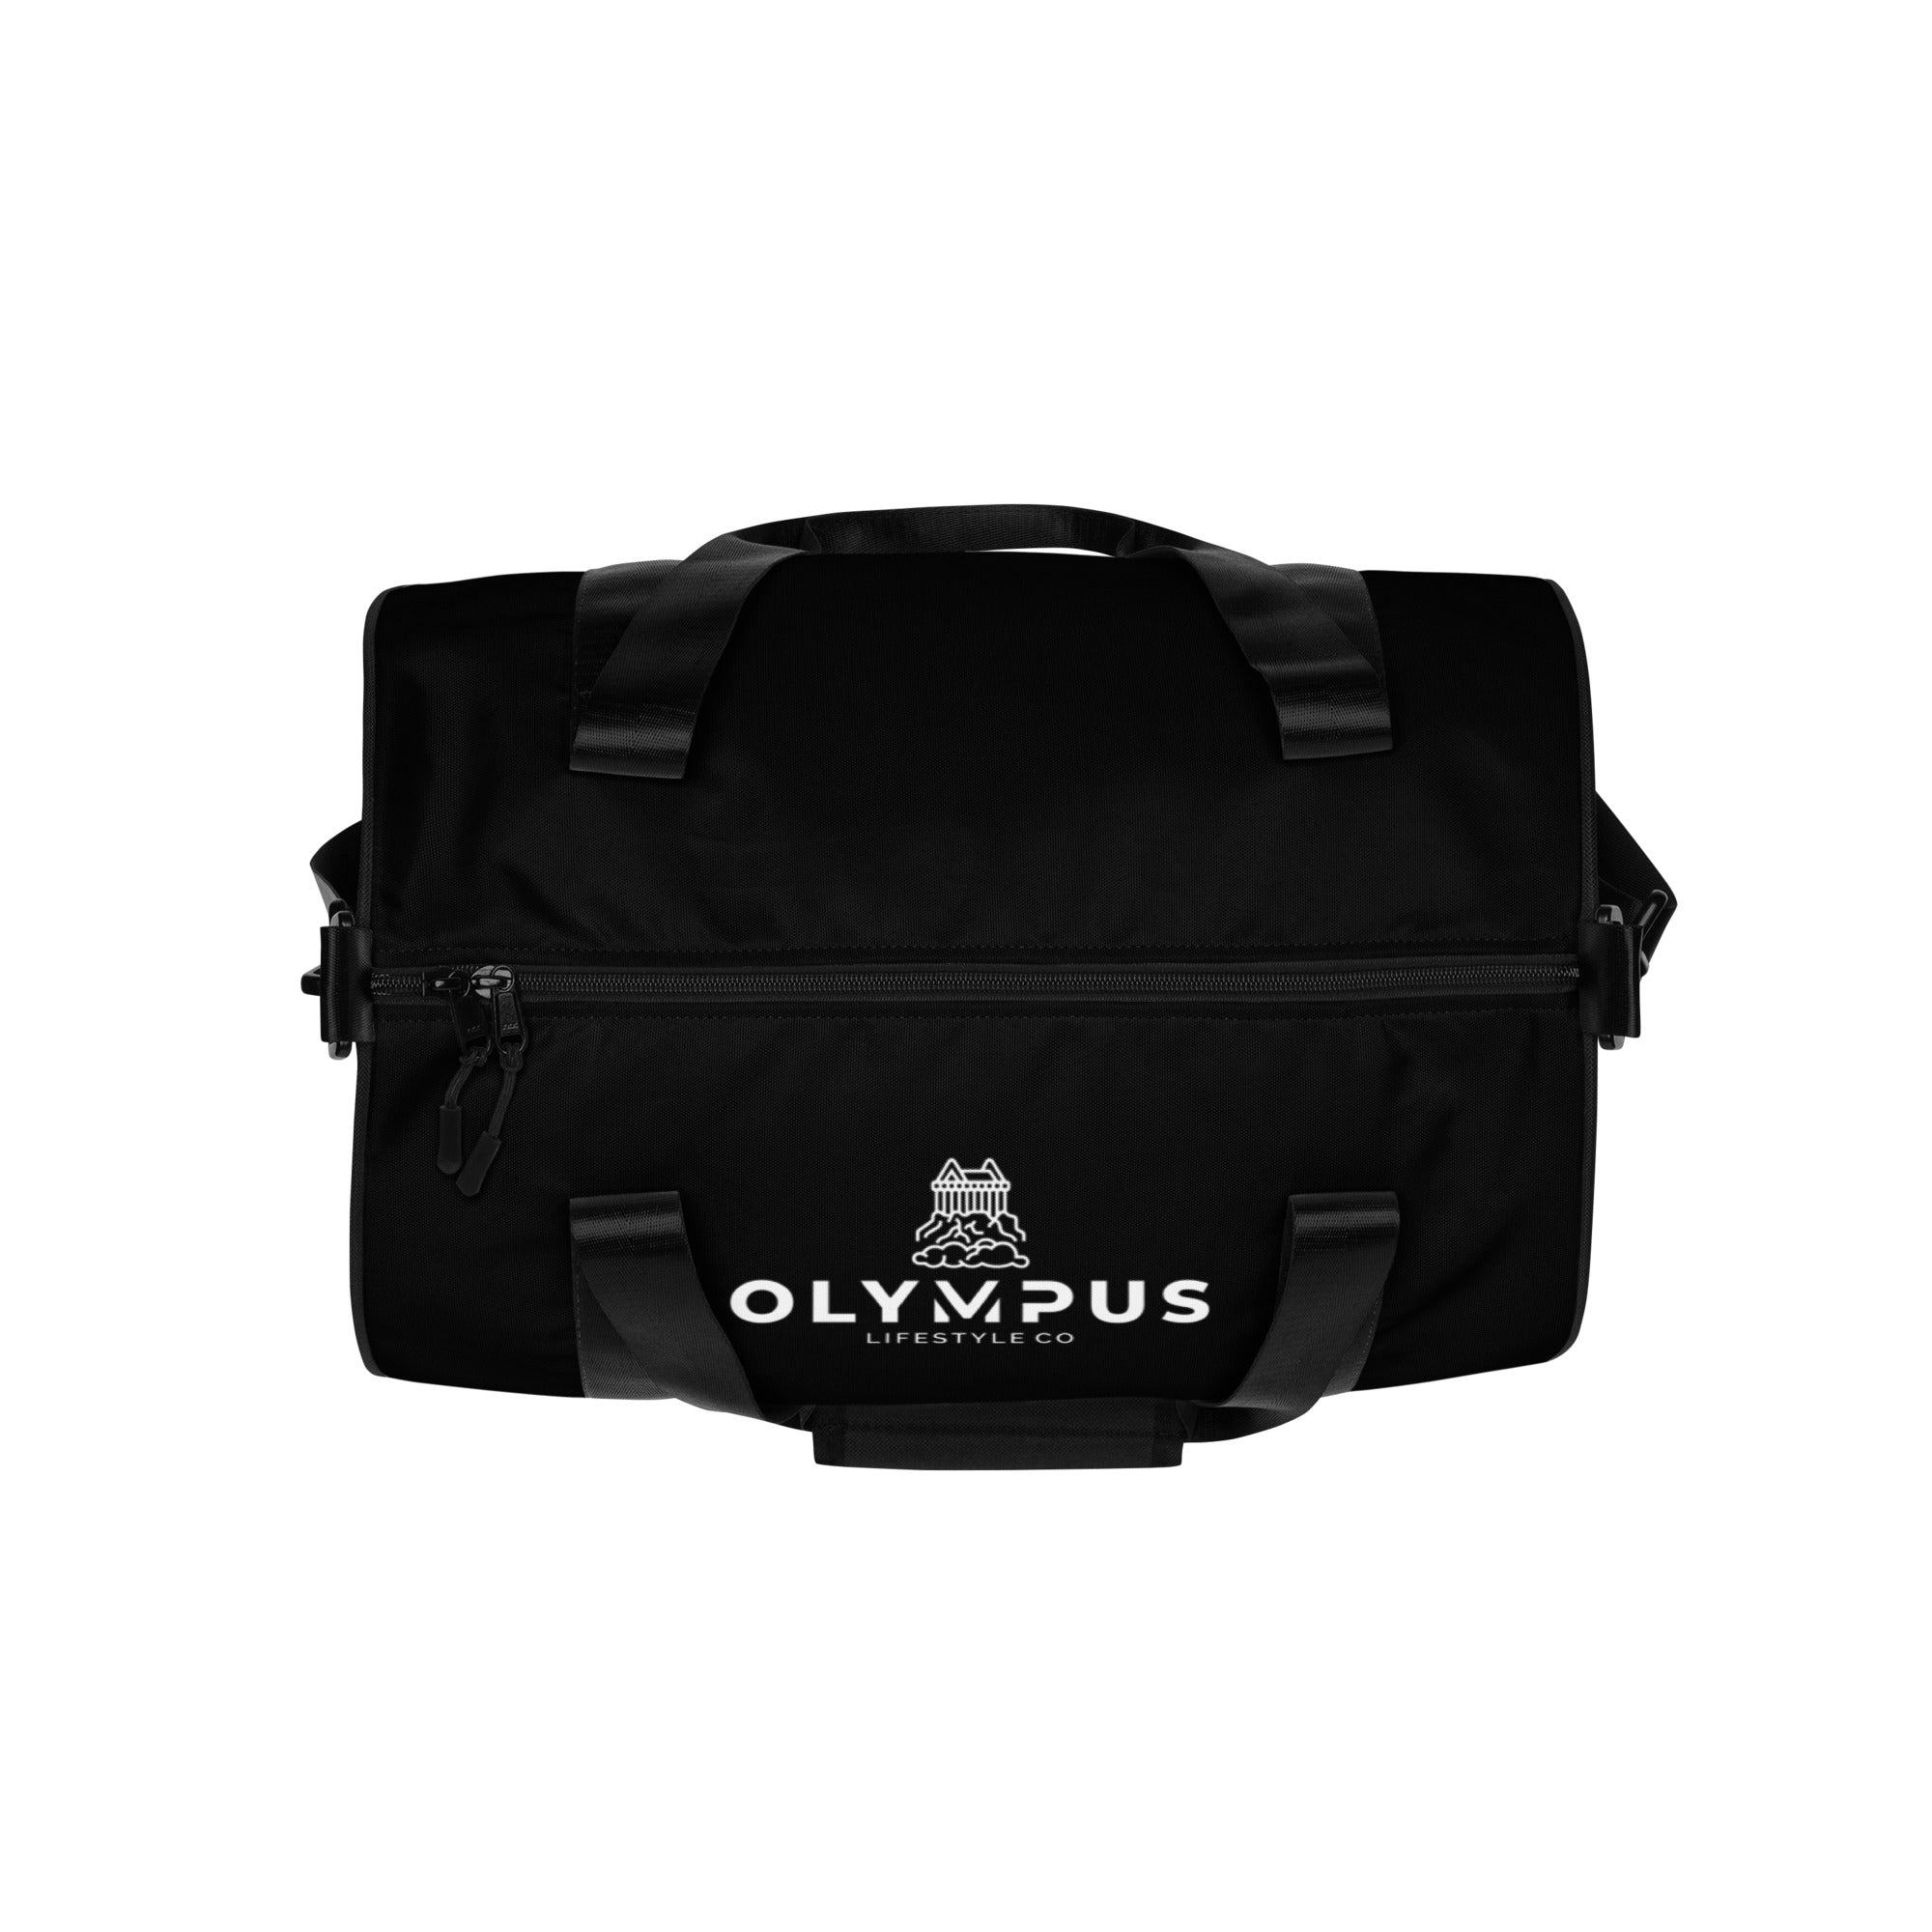 Olympus Gym Bag White Logo